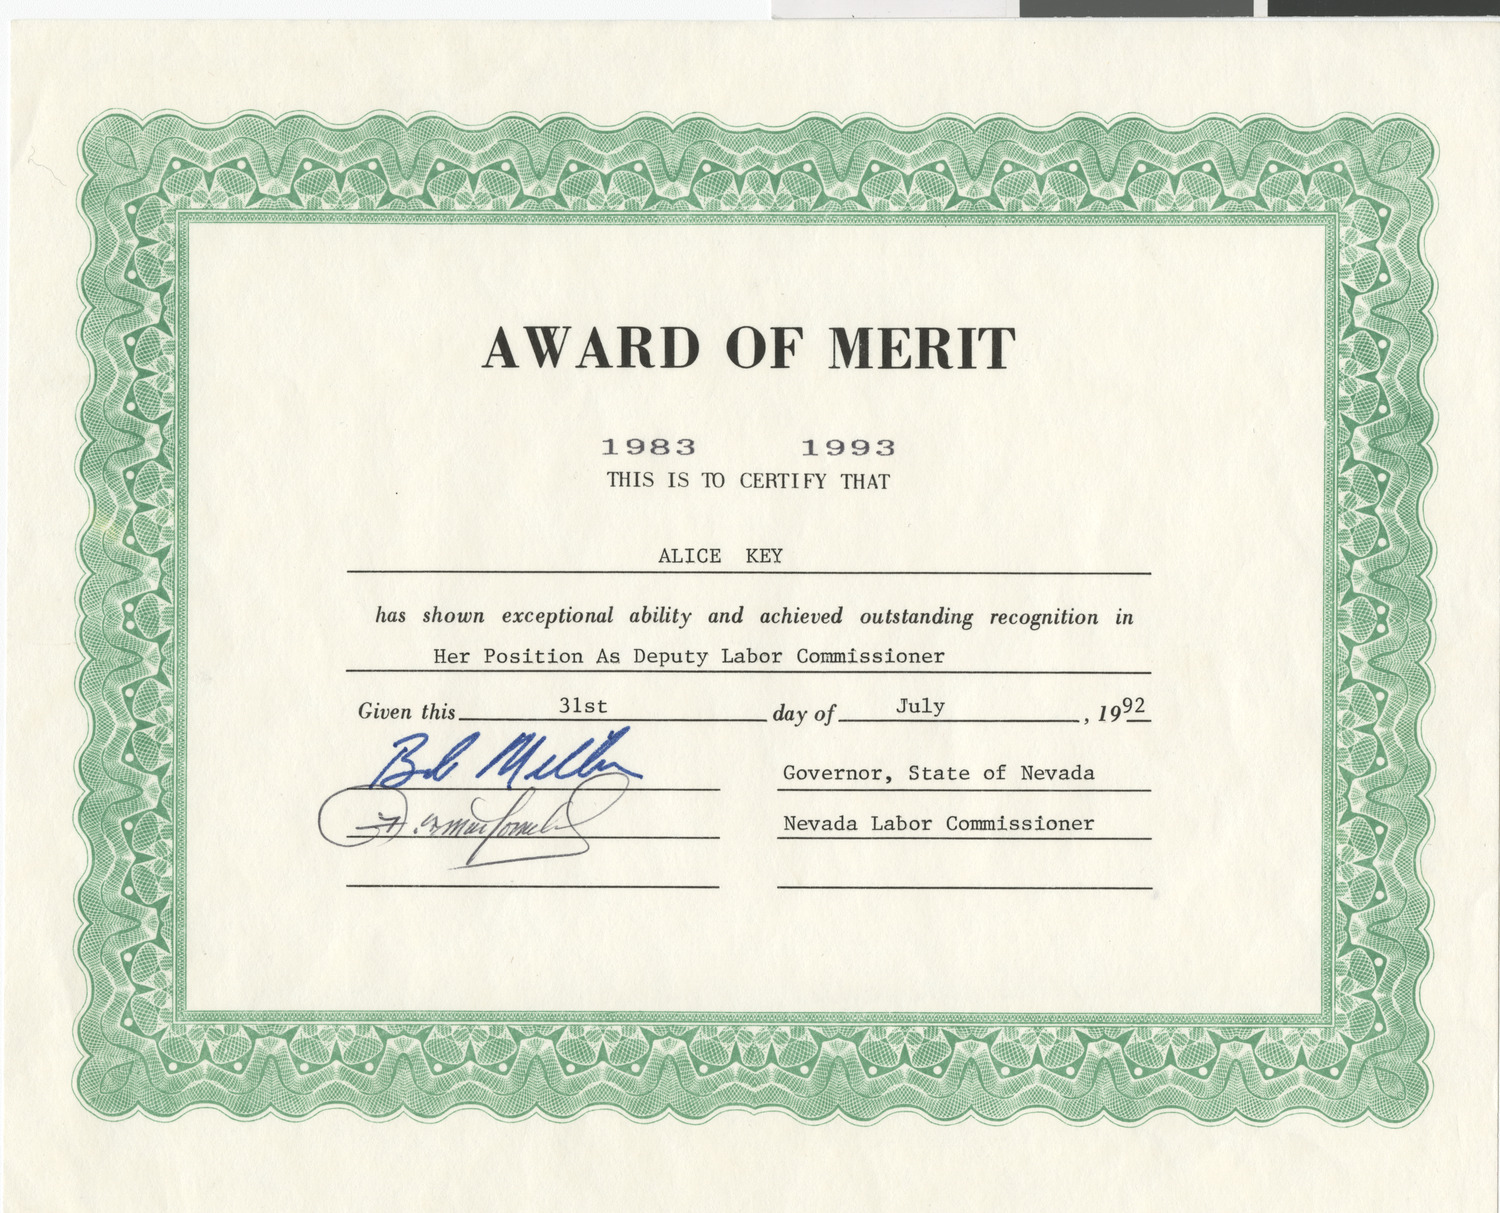 Award of Merit 1983-1993, Deputy Labor Commissioner